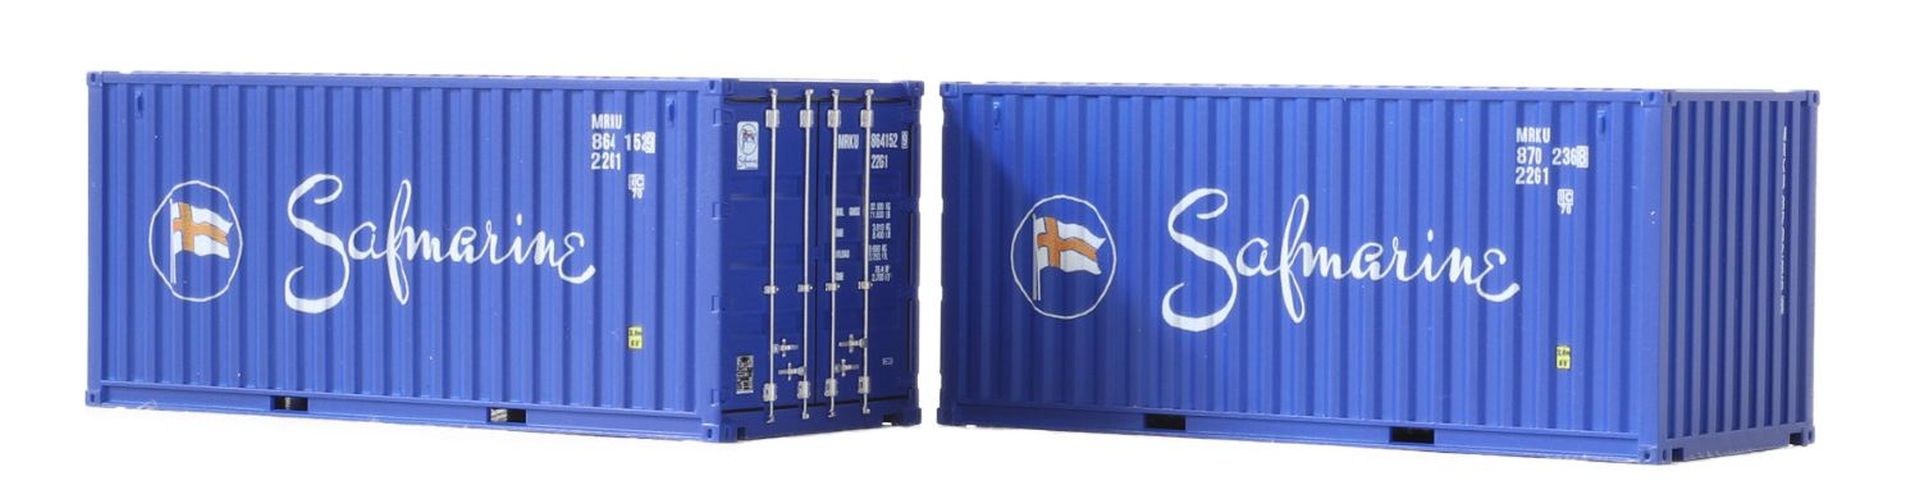 igra 98010021 - 2er Set Container 20', Safmarine